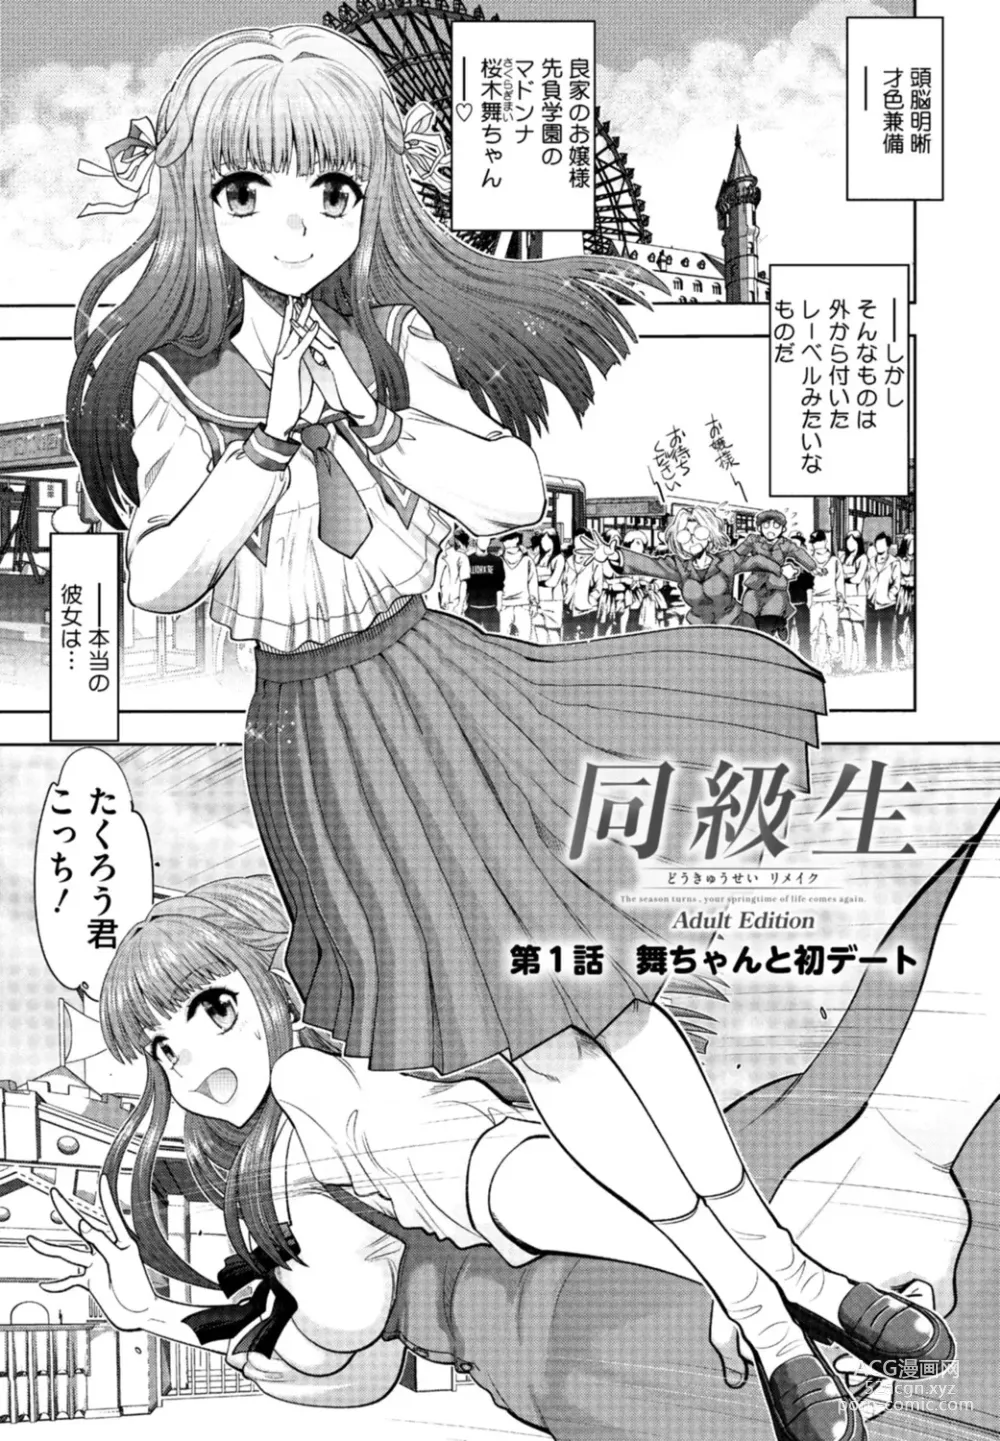 Page 5 of manga Doukyuusei  Remake Adult Edition